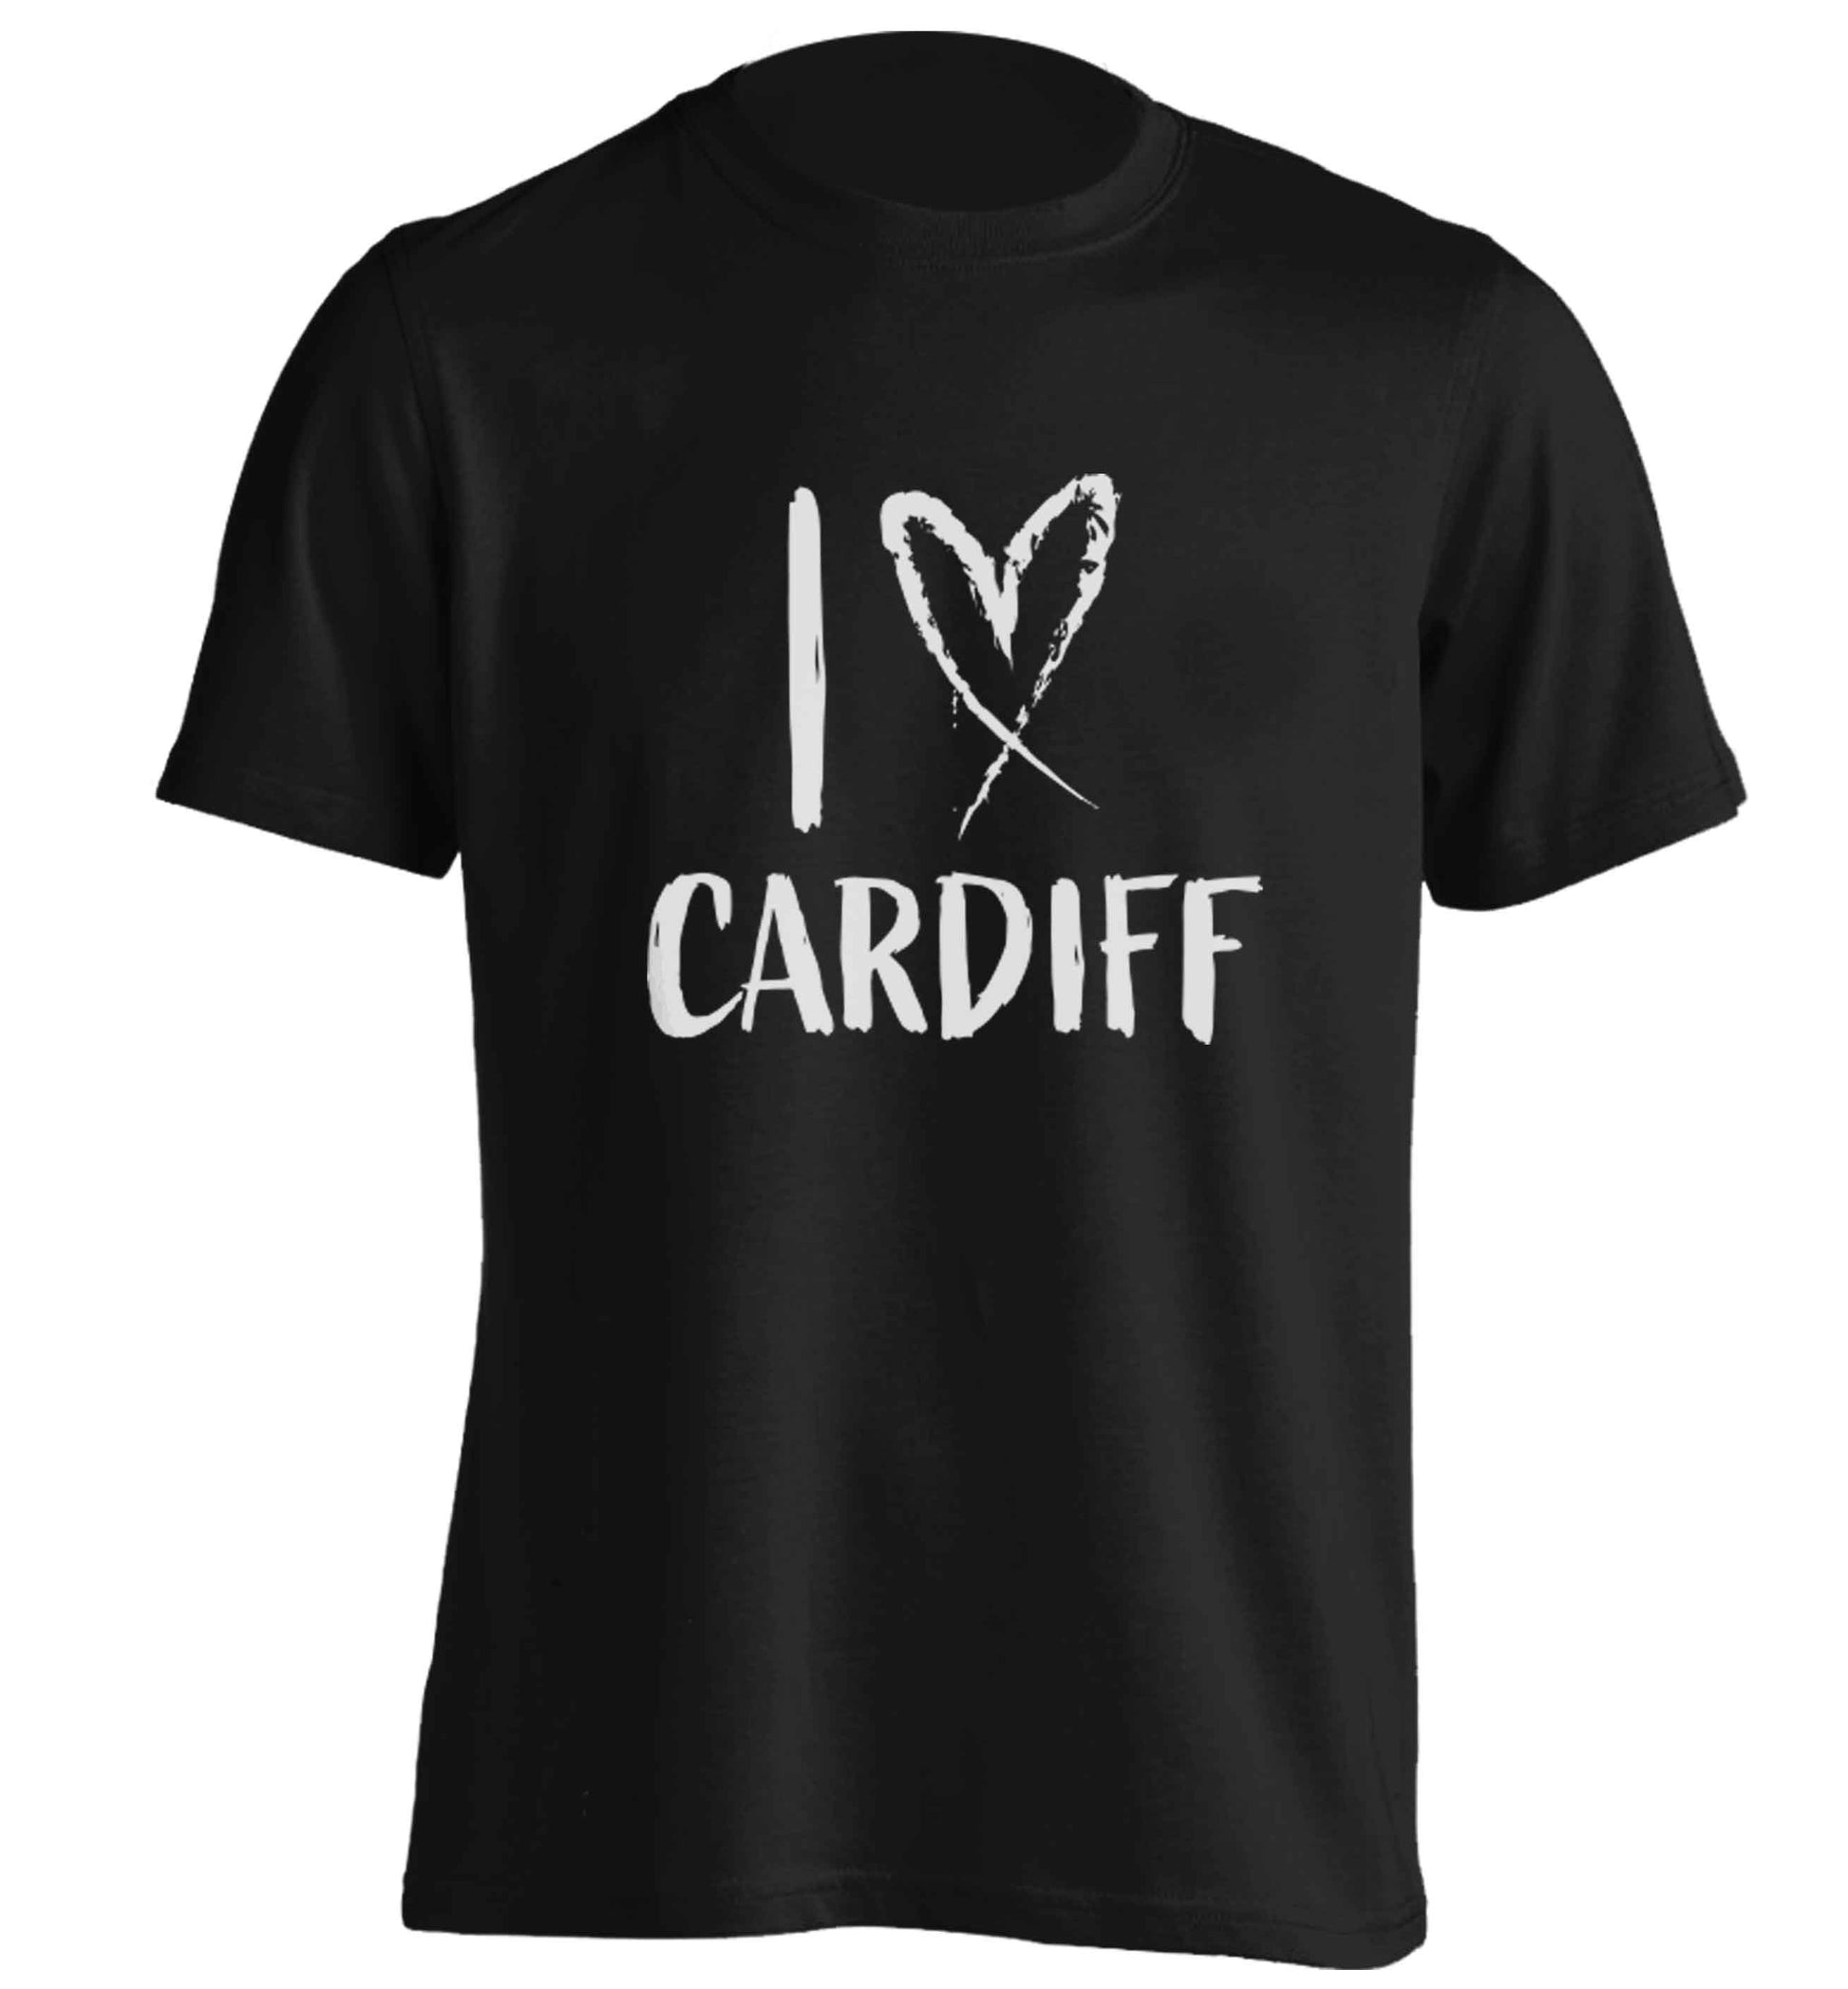 I love Cardiff adults unisex black Tshirt 2XL